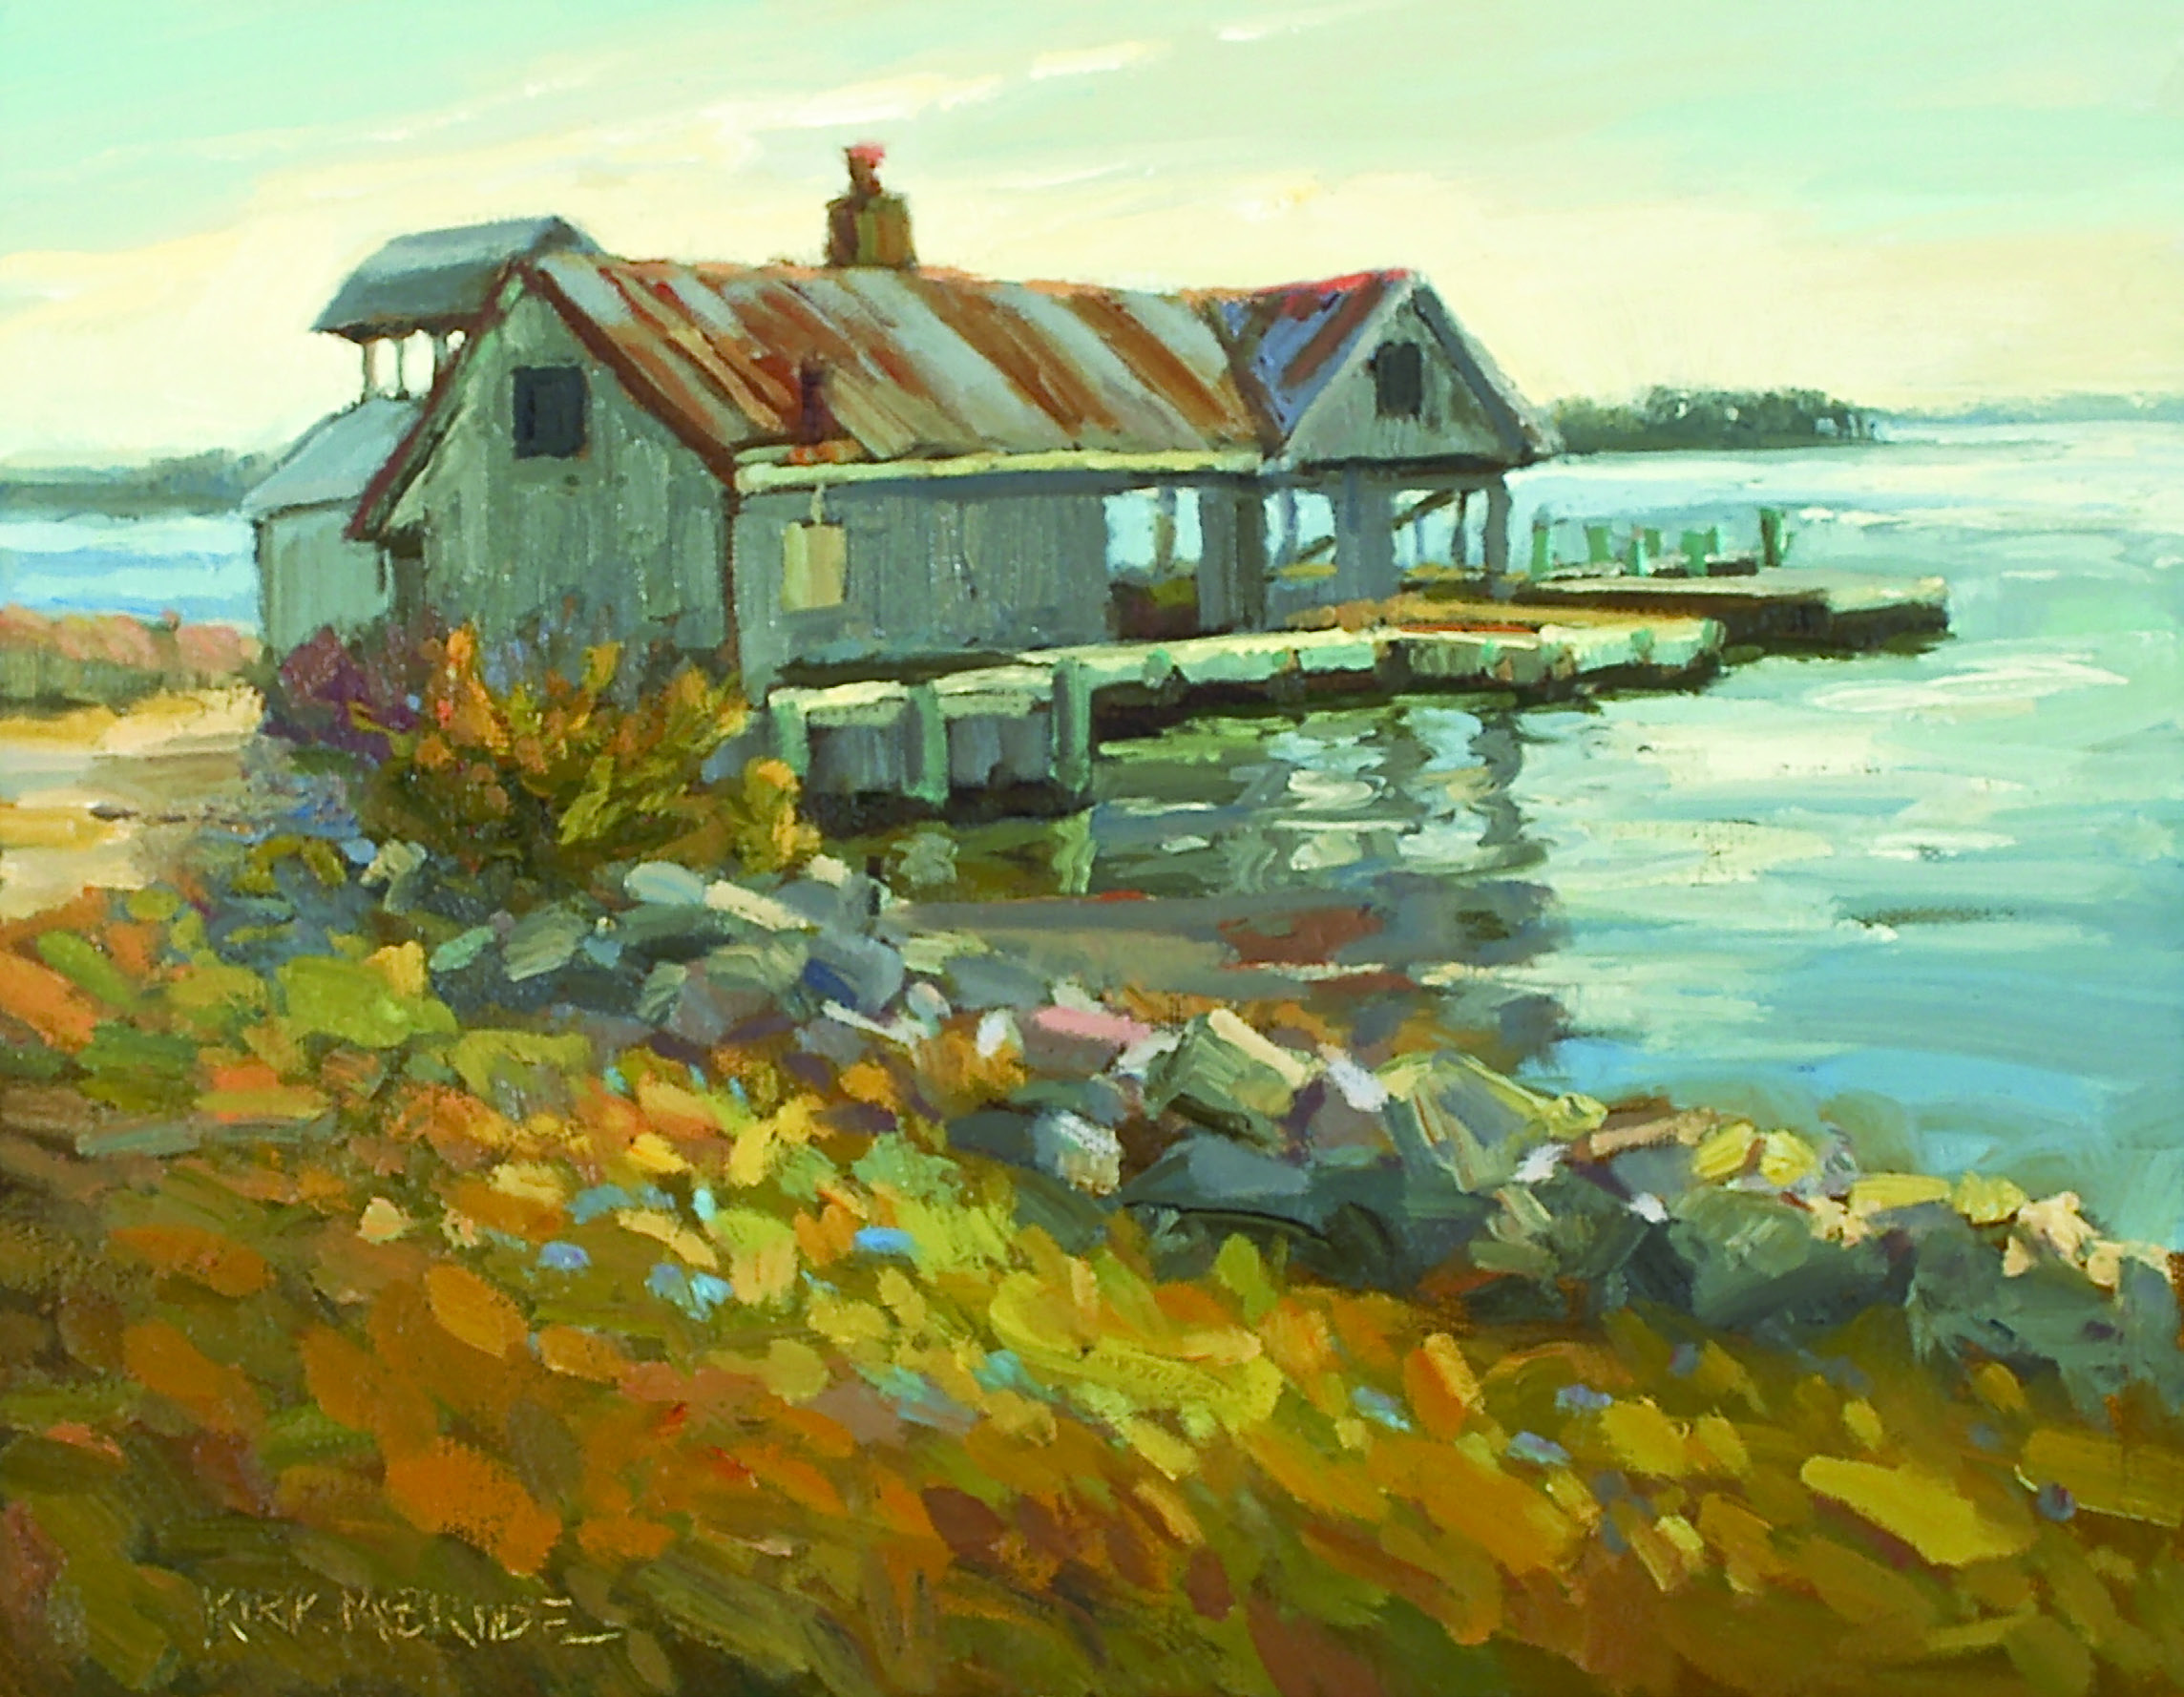 Kirk McBride, "Morning at the Landing," 2014, oil painting